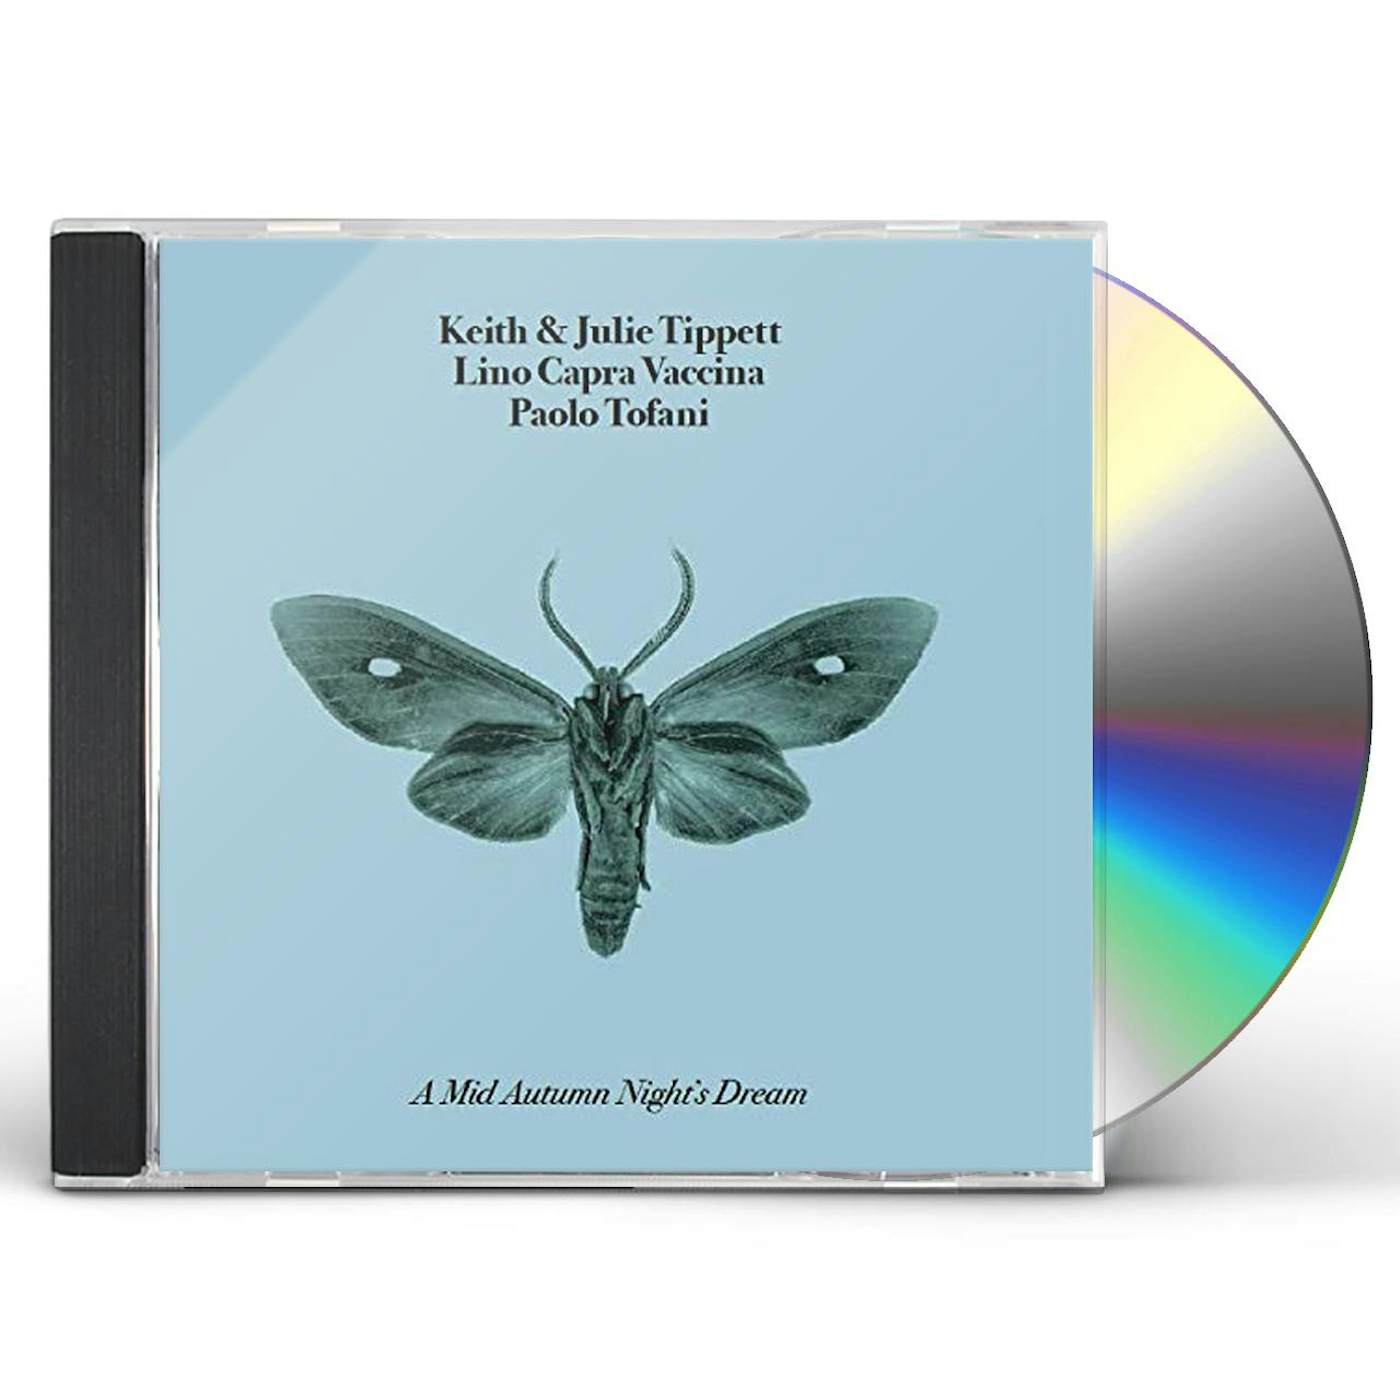 Tippett / Capra Vaccina / Tofani MID AUTUMN NIGHT'S DREAM CD